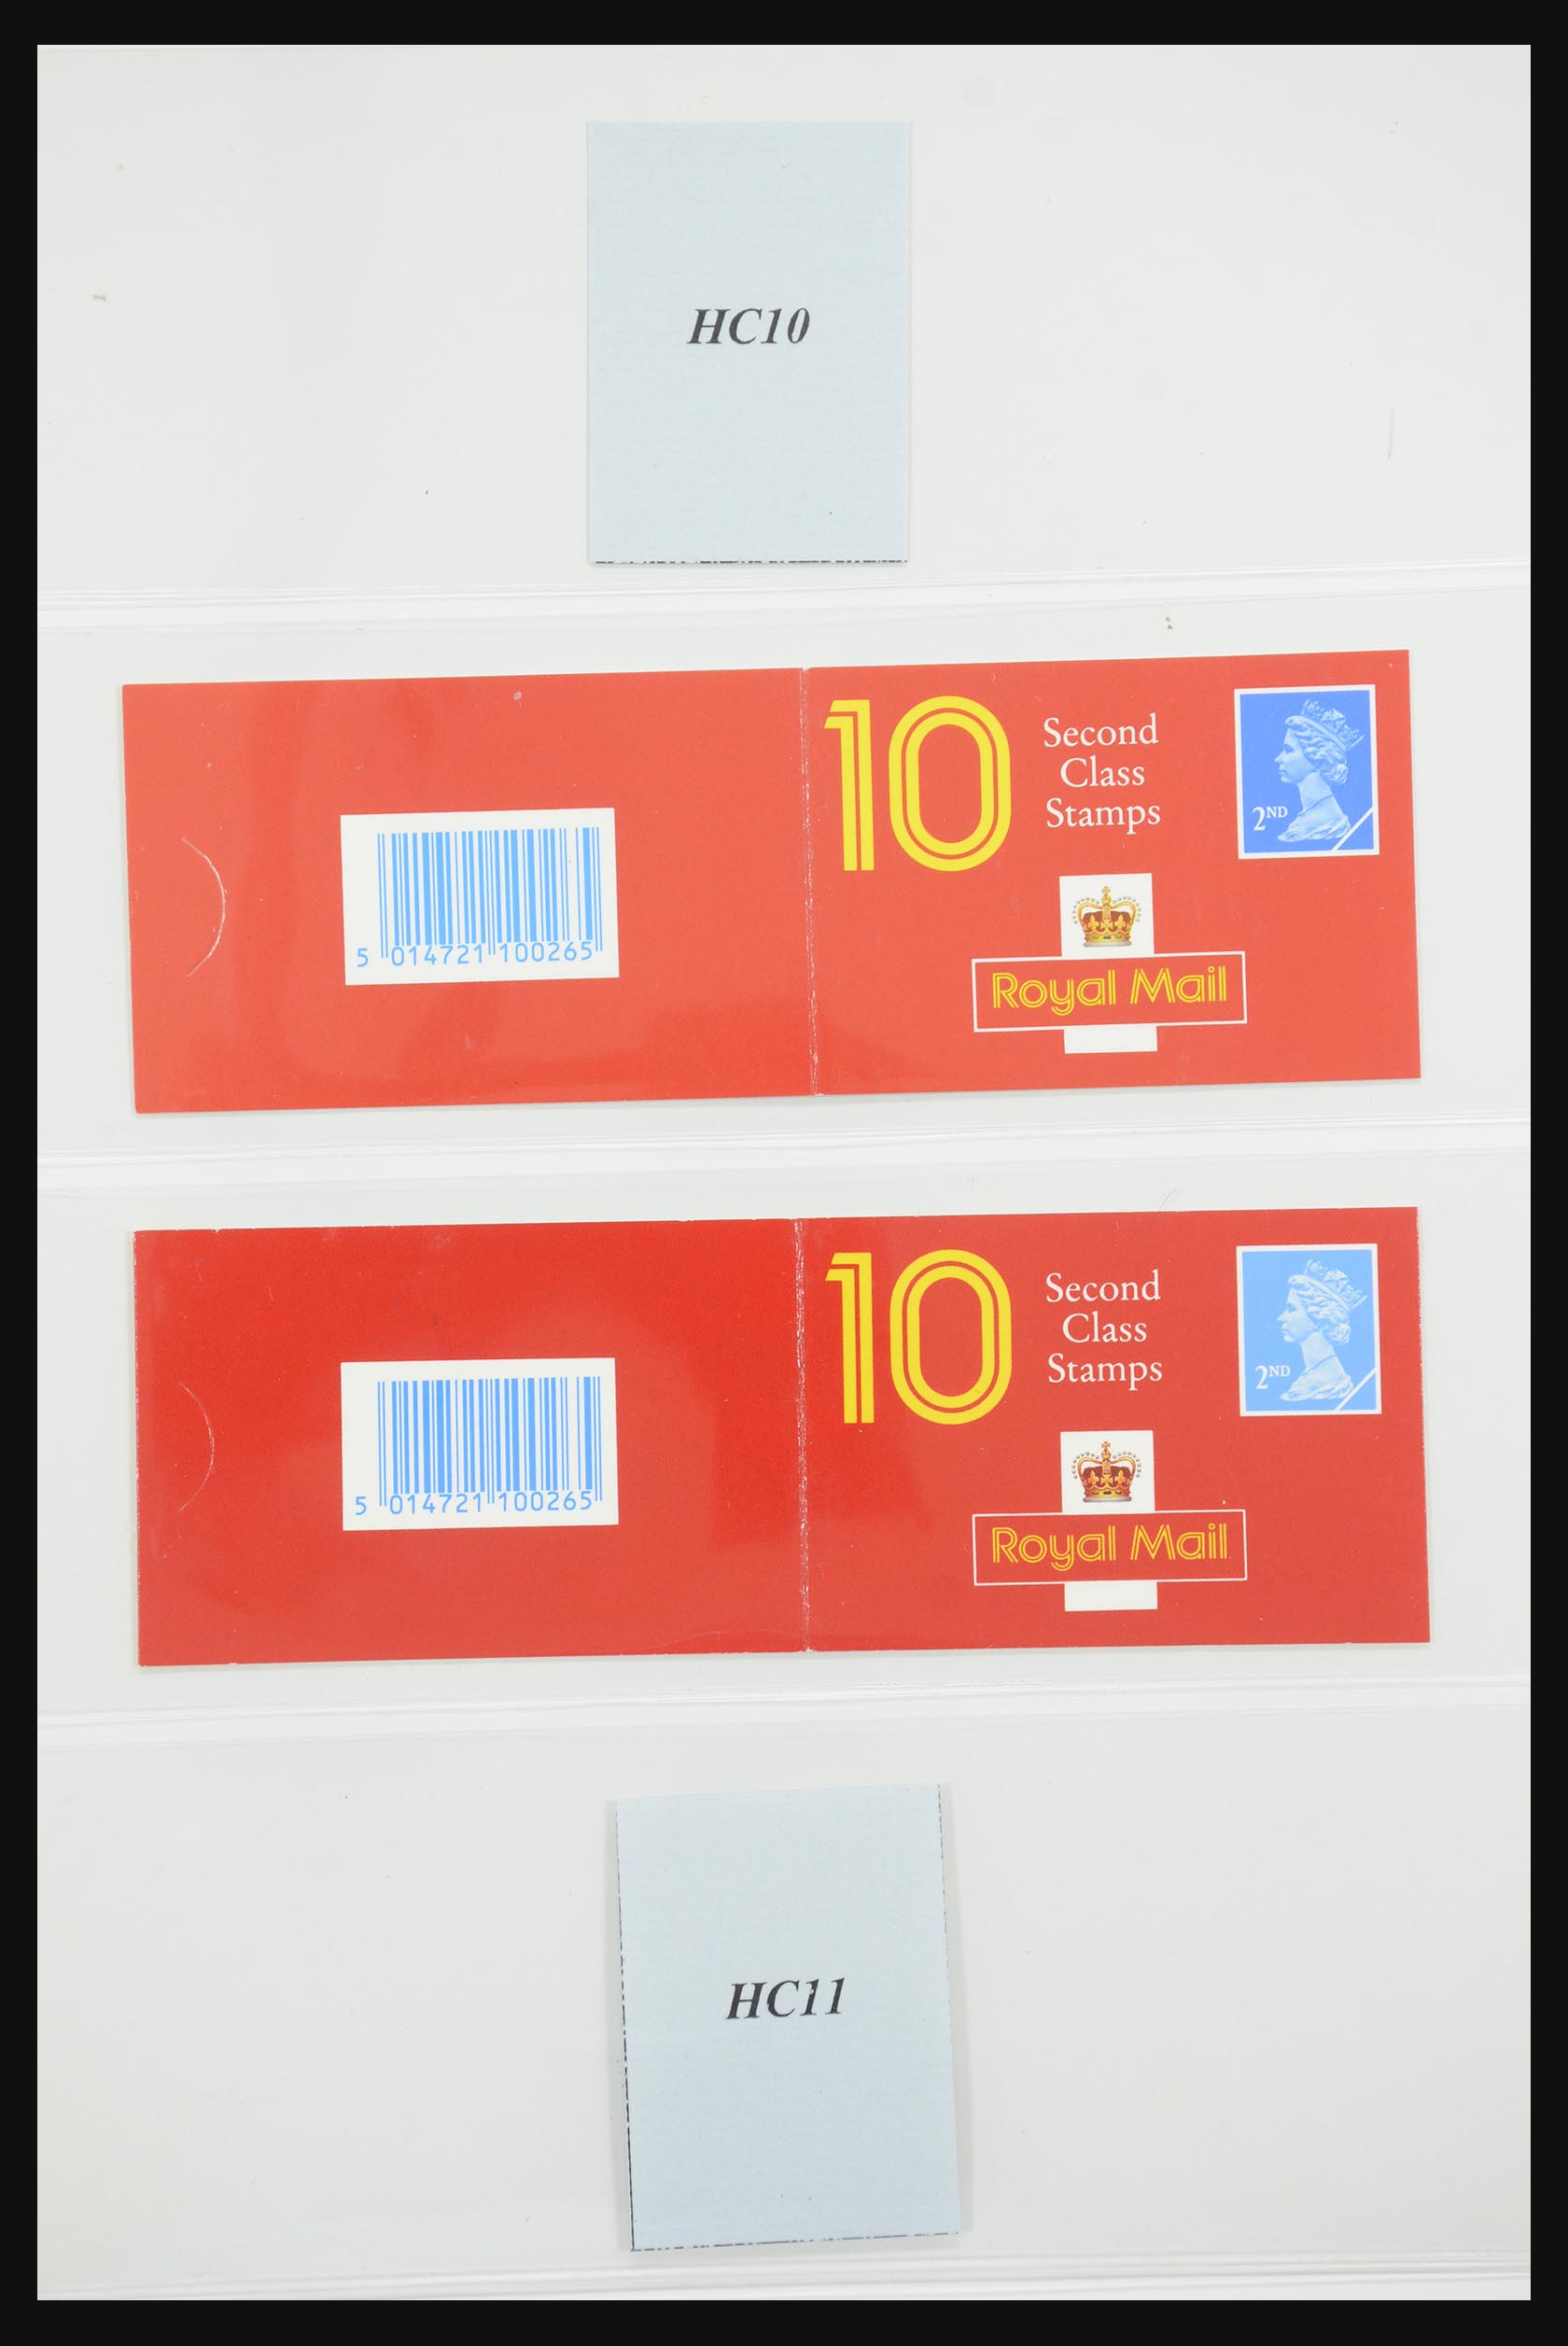 31960 073 - 31960 Great Britain stampbooklets 1989-2000.